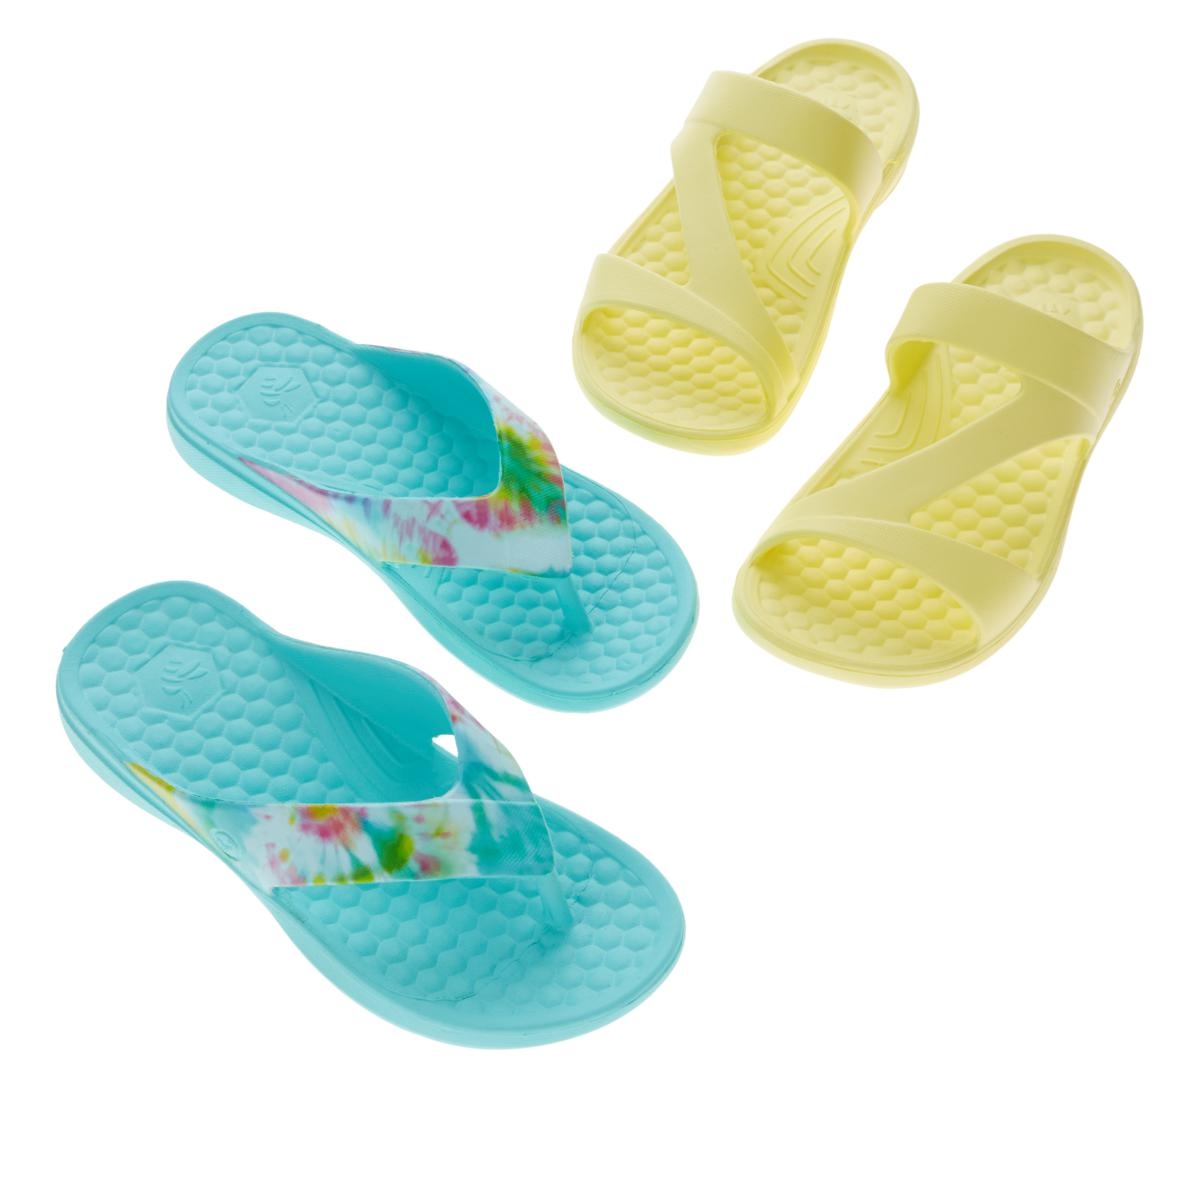 Joybees 2-pack EVA Sandals - Yellow/Aqua Tie Dye - Size 11 Meilleures ...